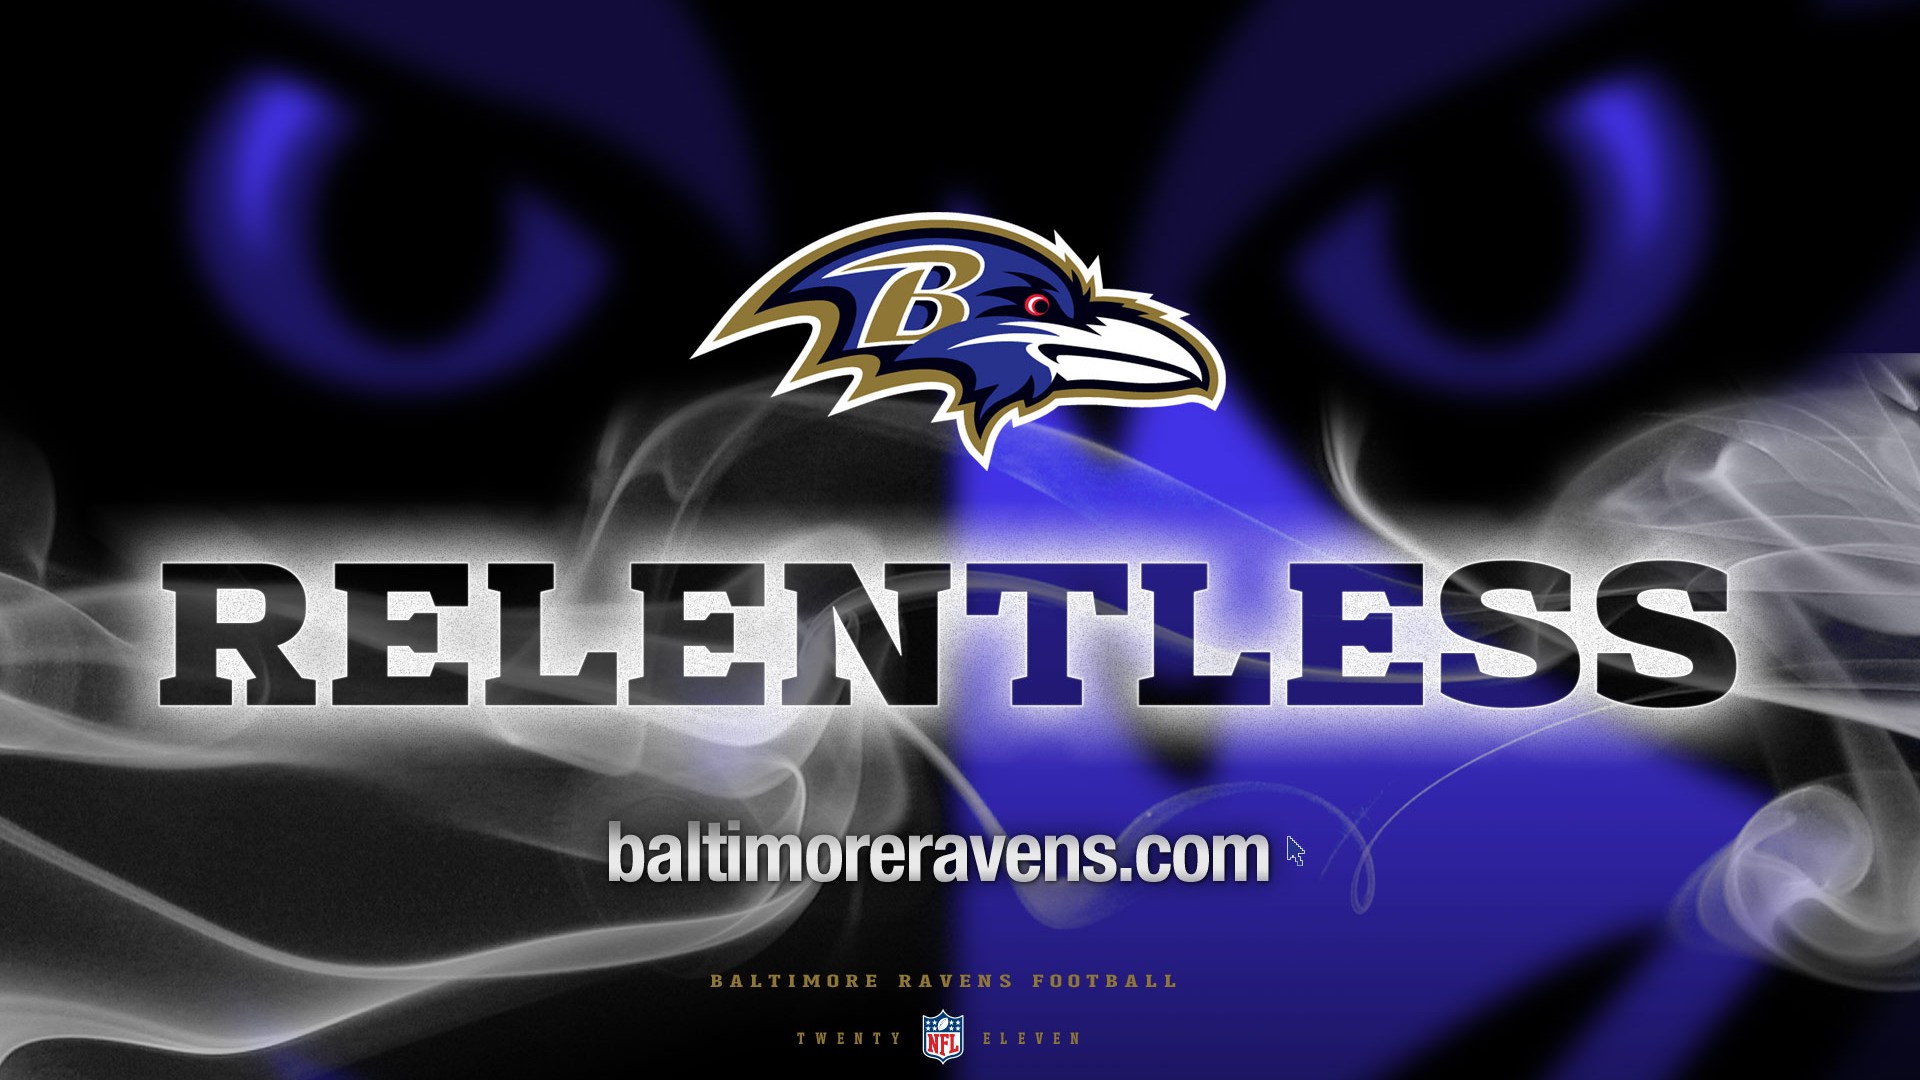 HD Desktop Wallpaper Baltimore Ravens With Resolution 1920X1080